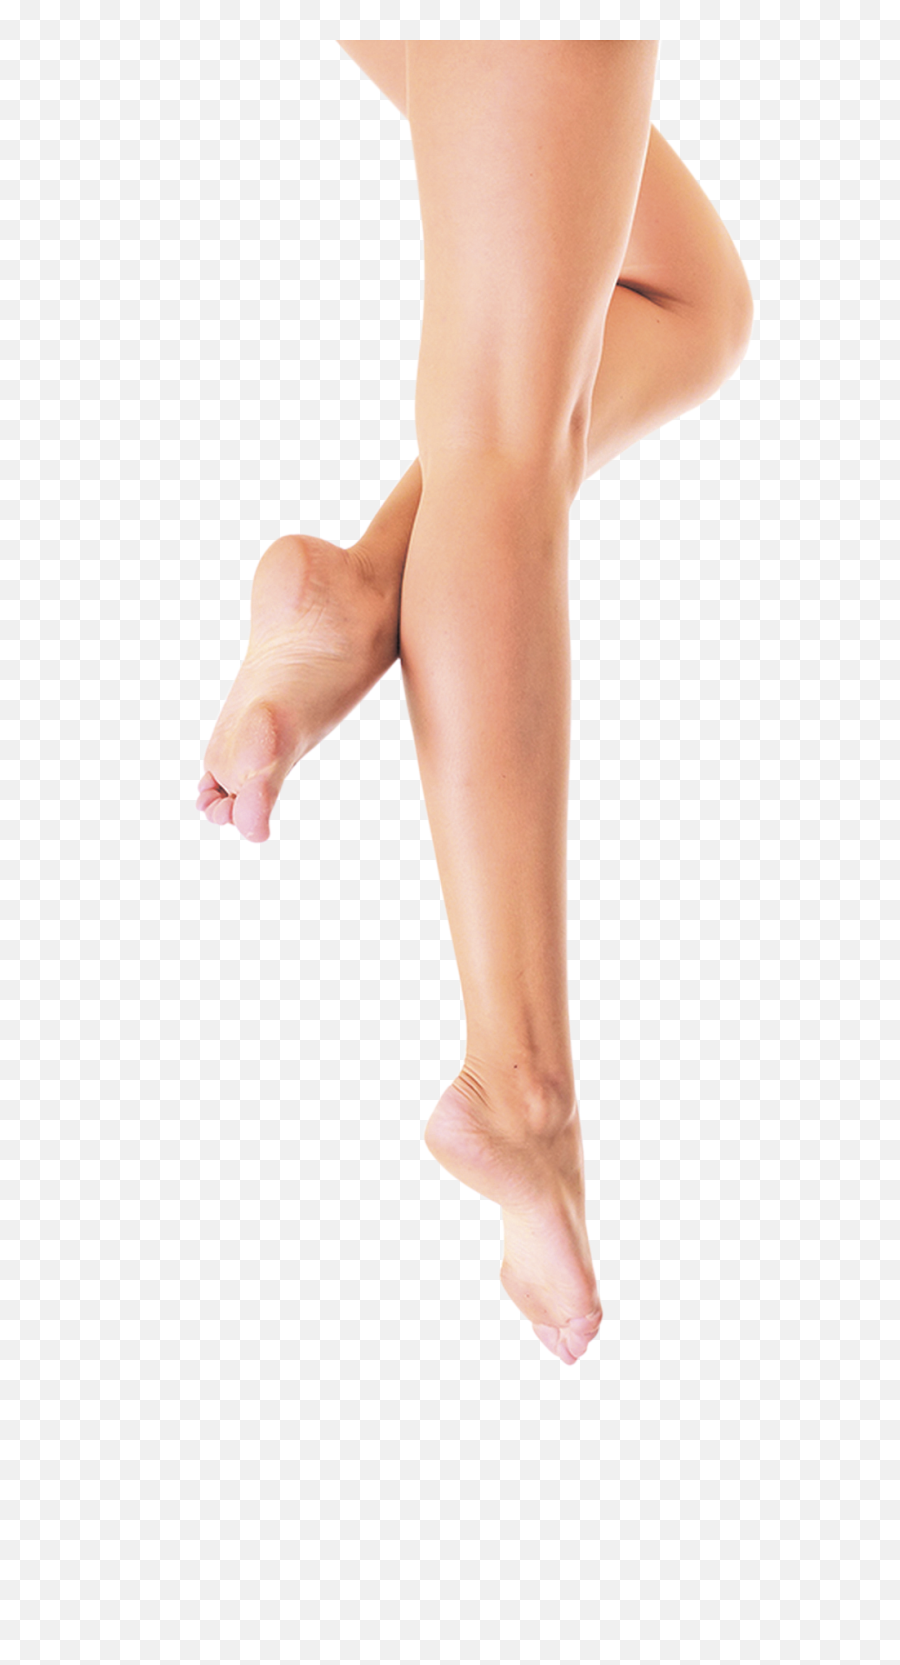 Women Legs Png Image - Legs Transparent Background,Legs Png